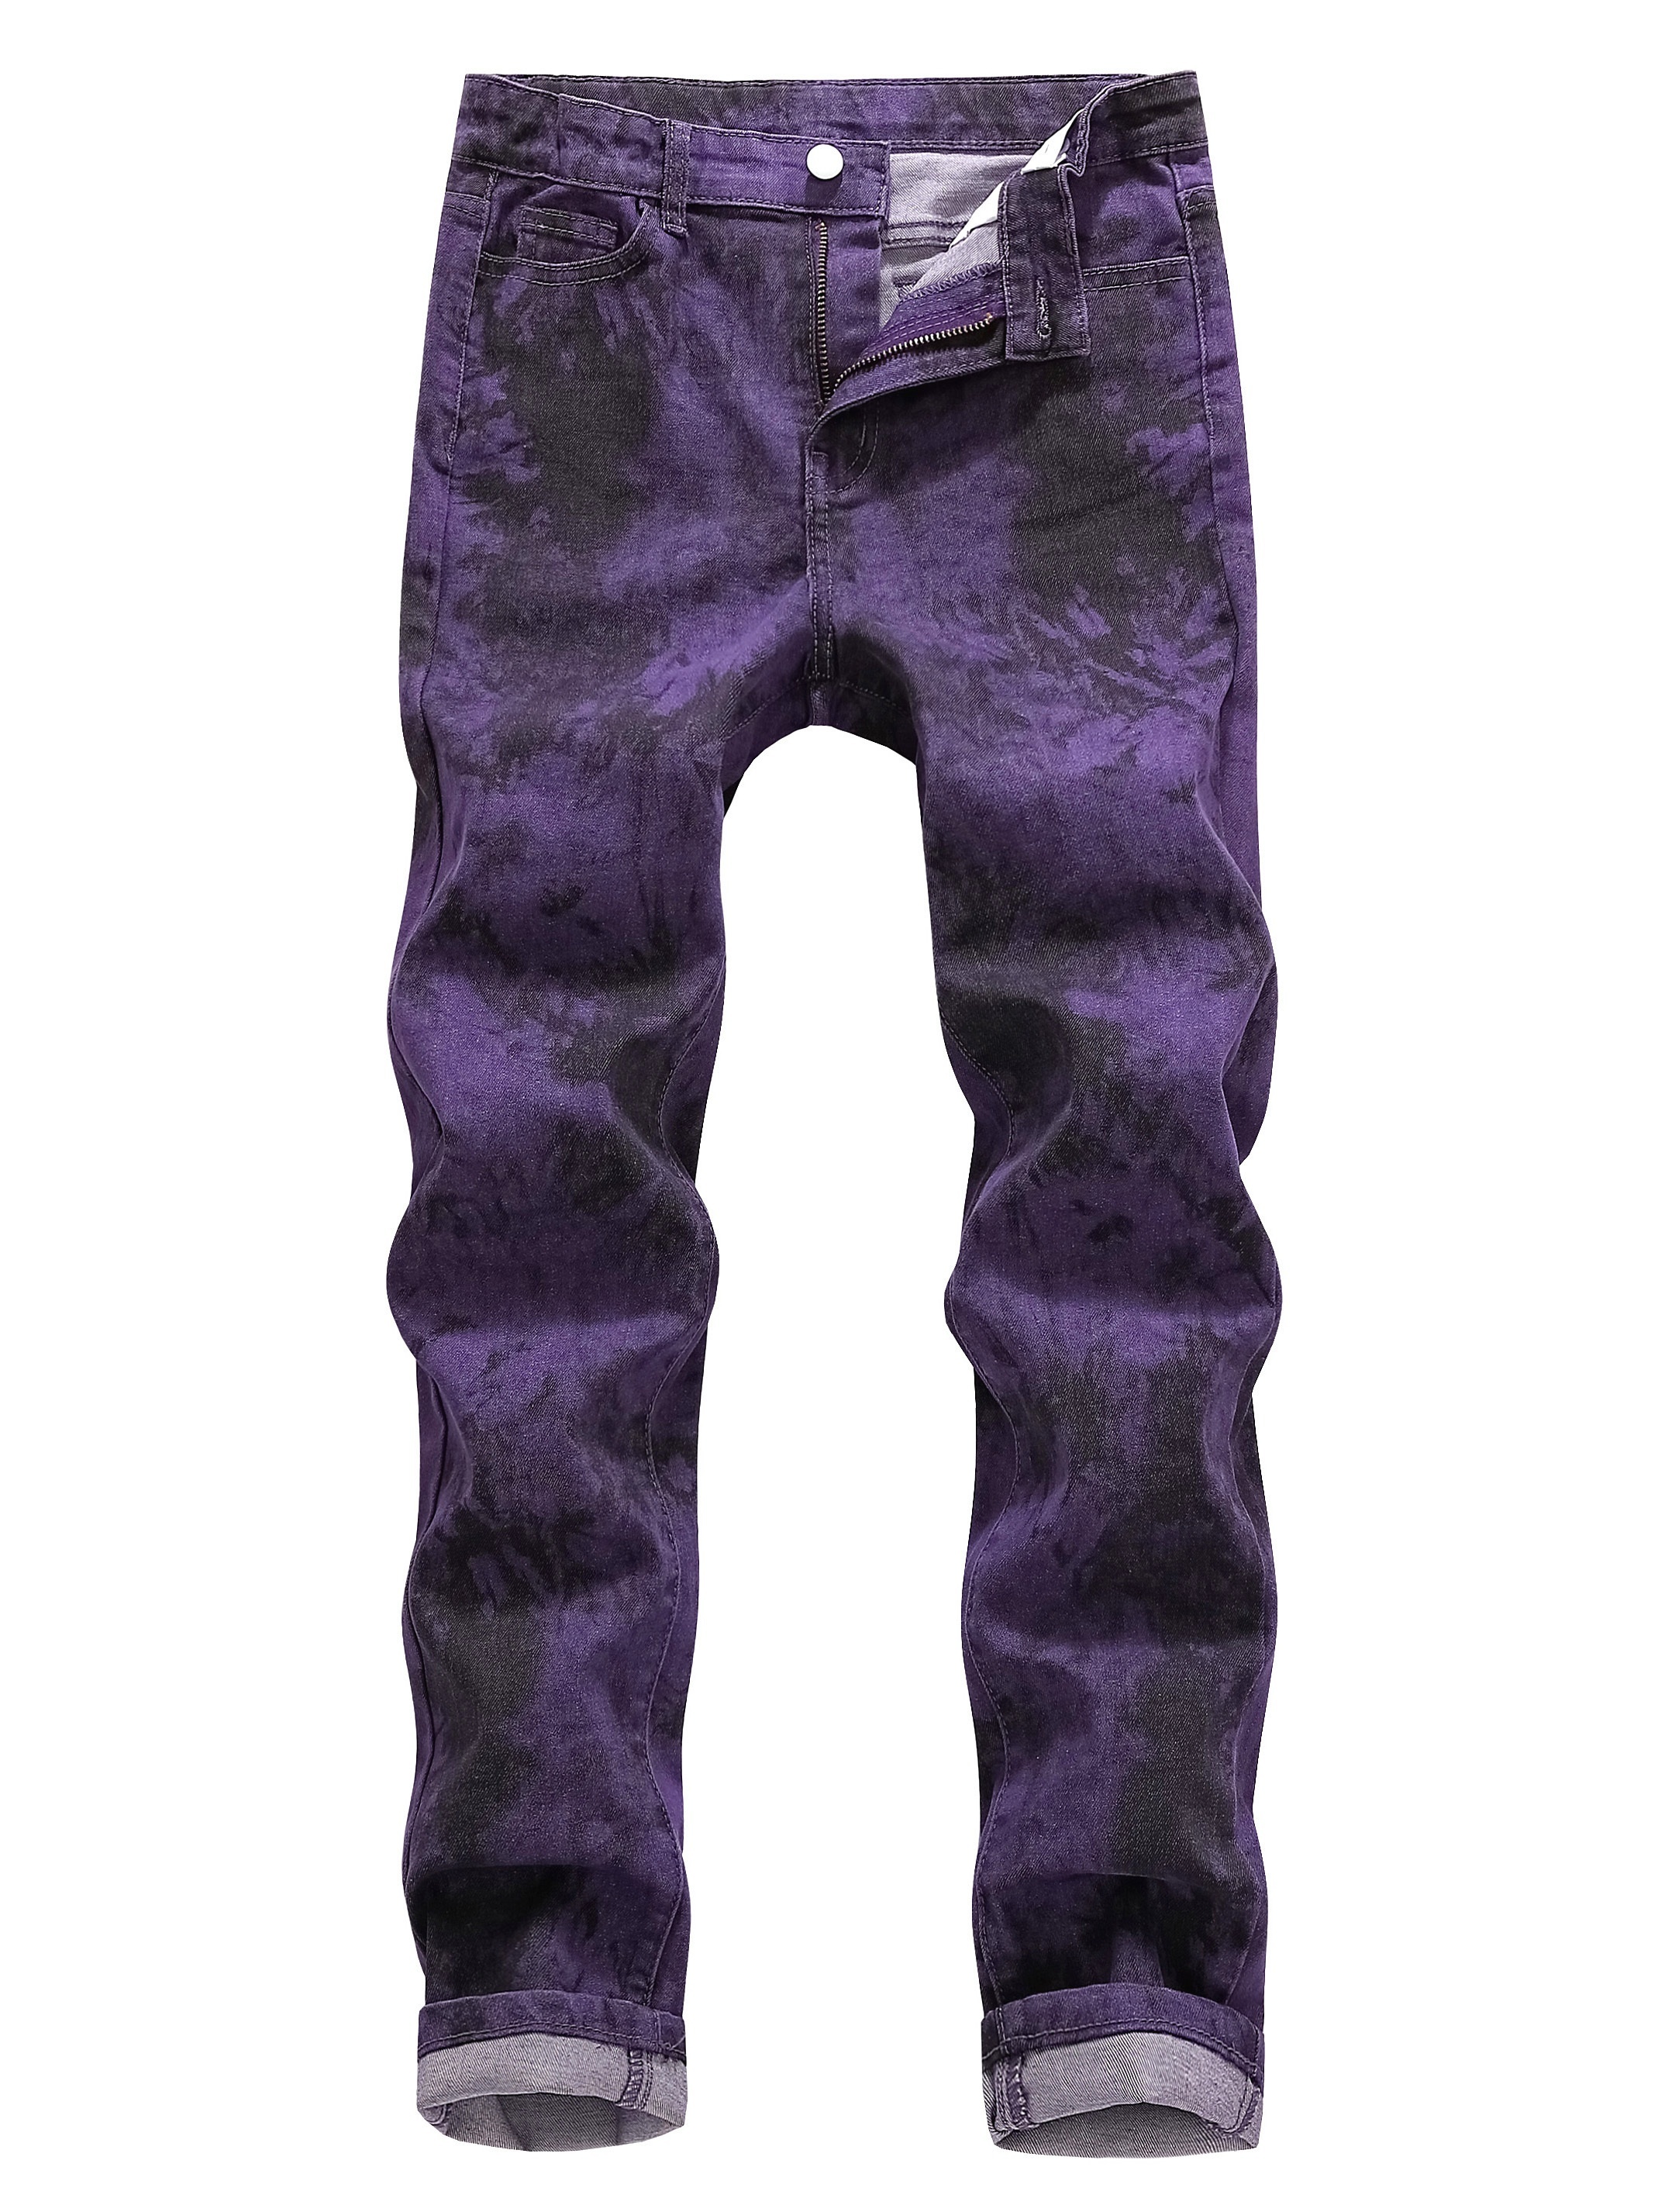 Designer Purple Brand Jeans for Men Women Pants Purple Summer Hole Hight  Quality Embroidery Jean Denim Trousers Mens Purple Jeans RO TRGU